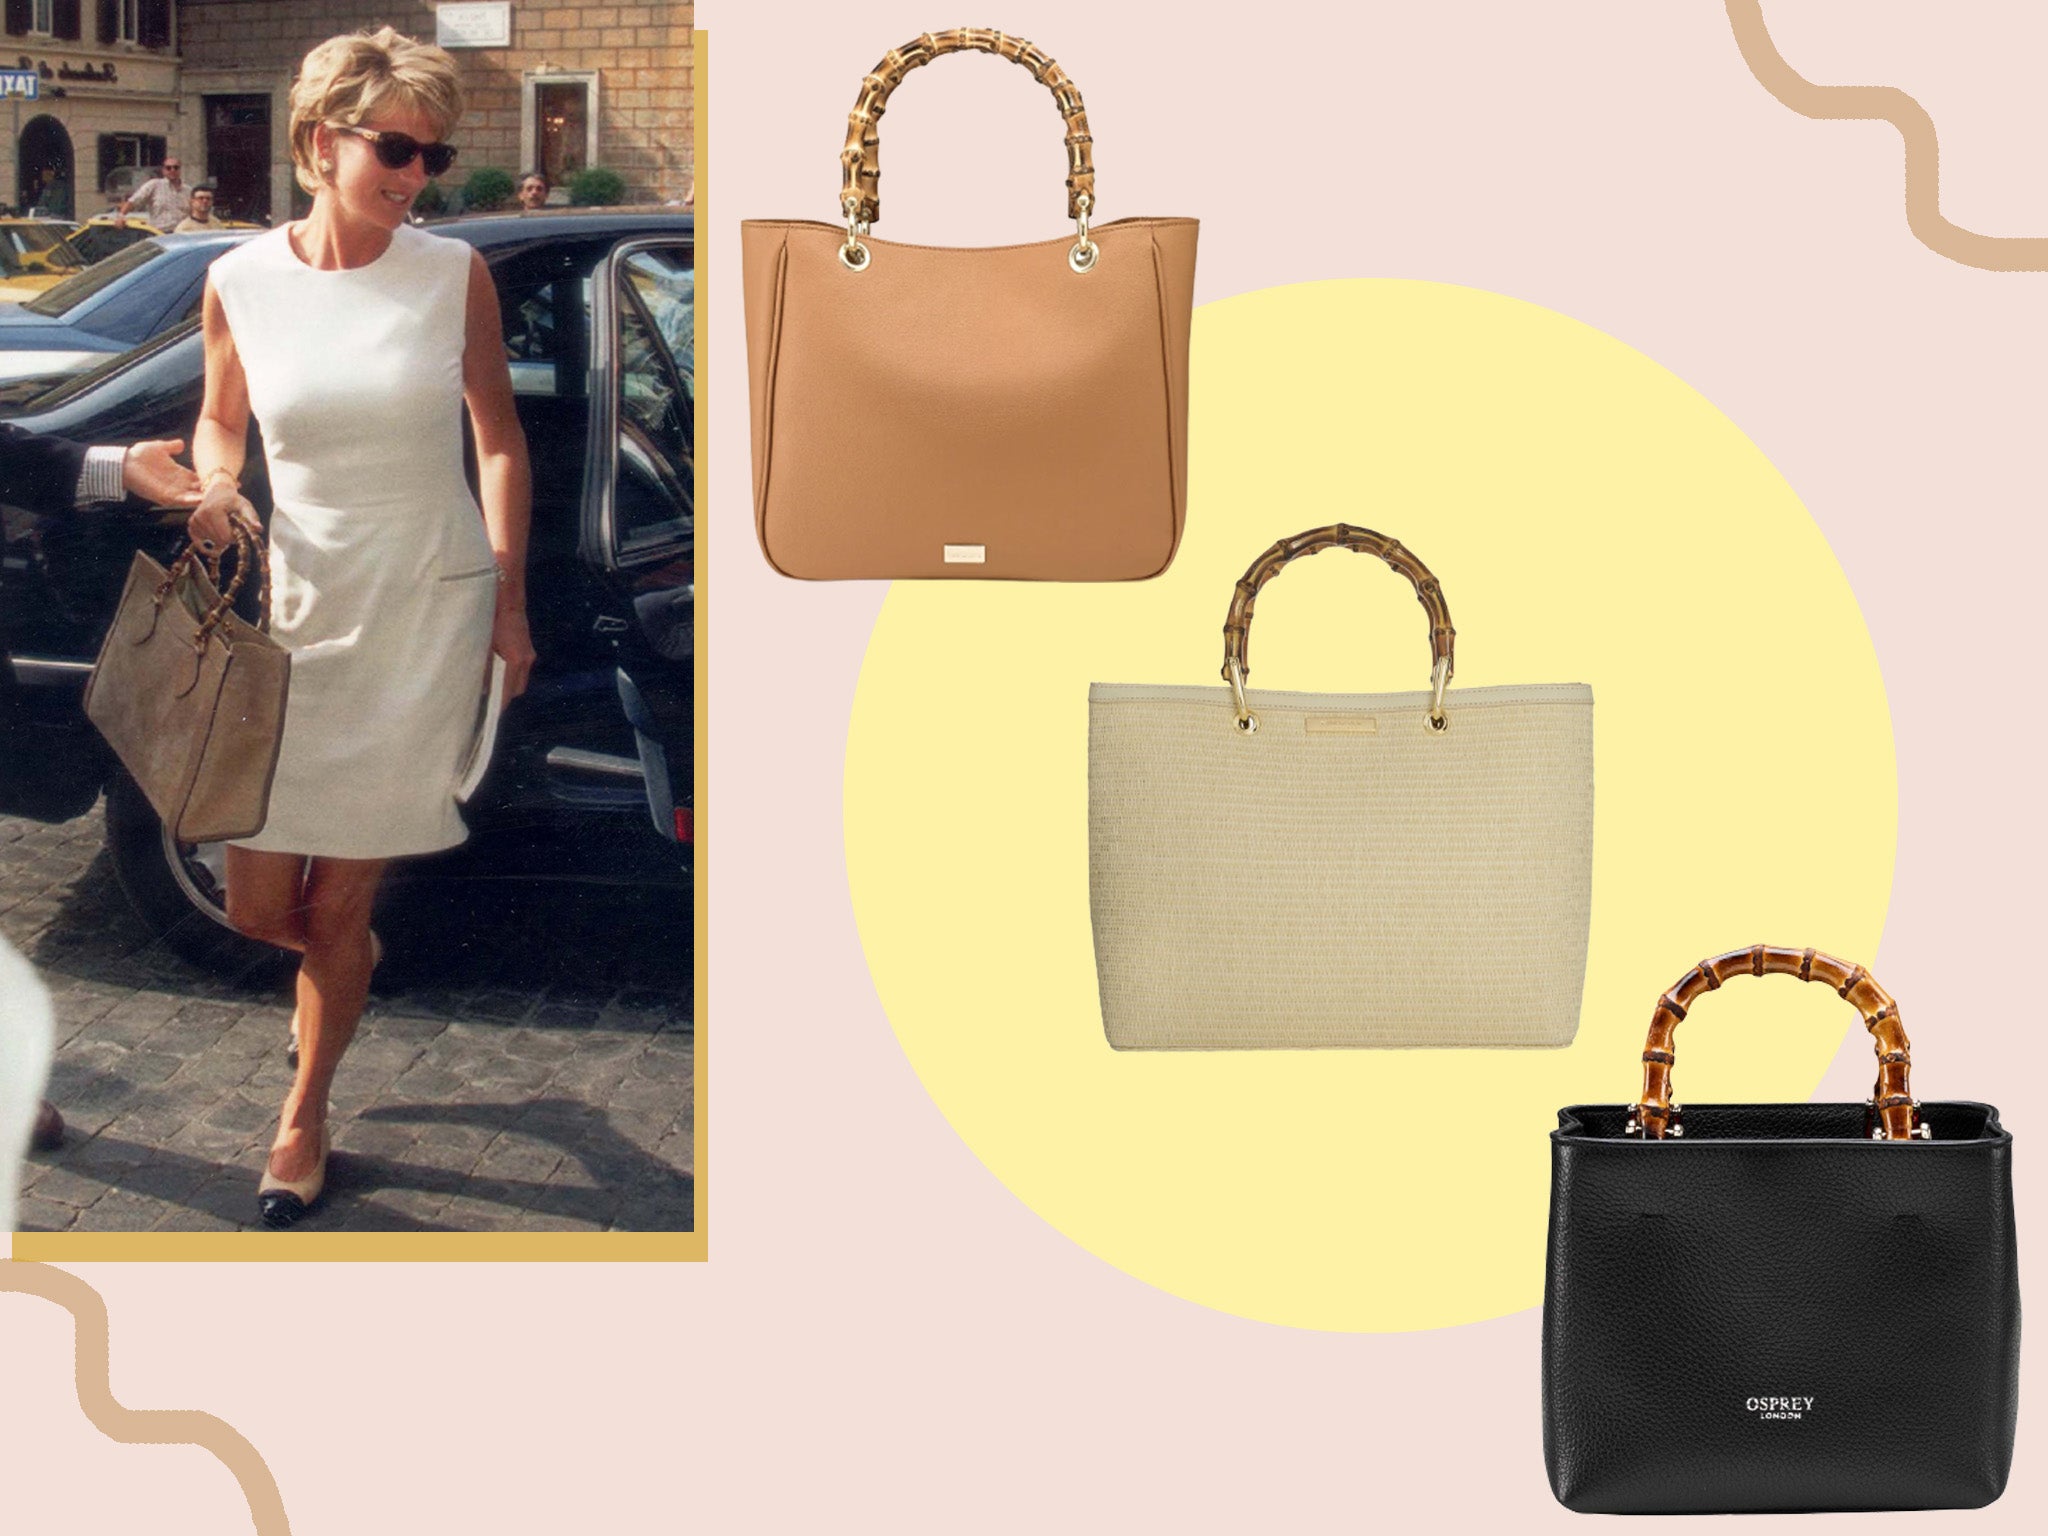 Gucci Relaunches Their Bamboo Handbag That Was Princess Diana's